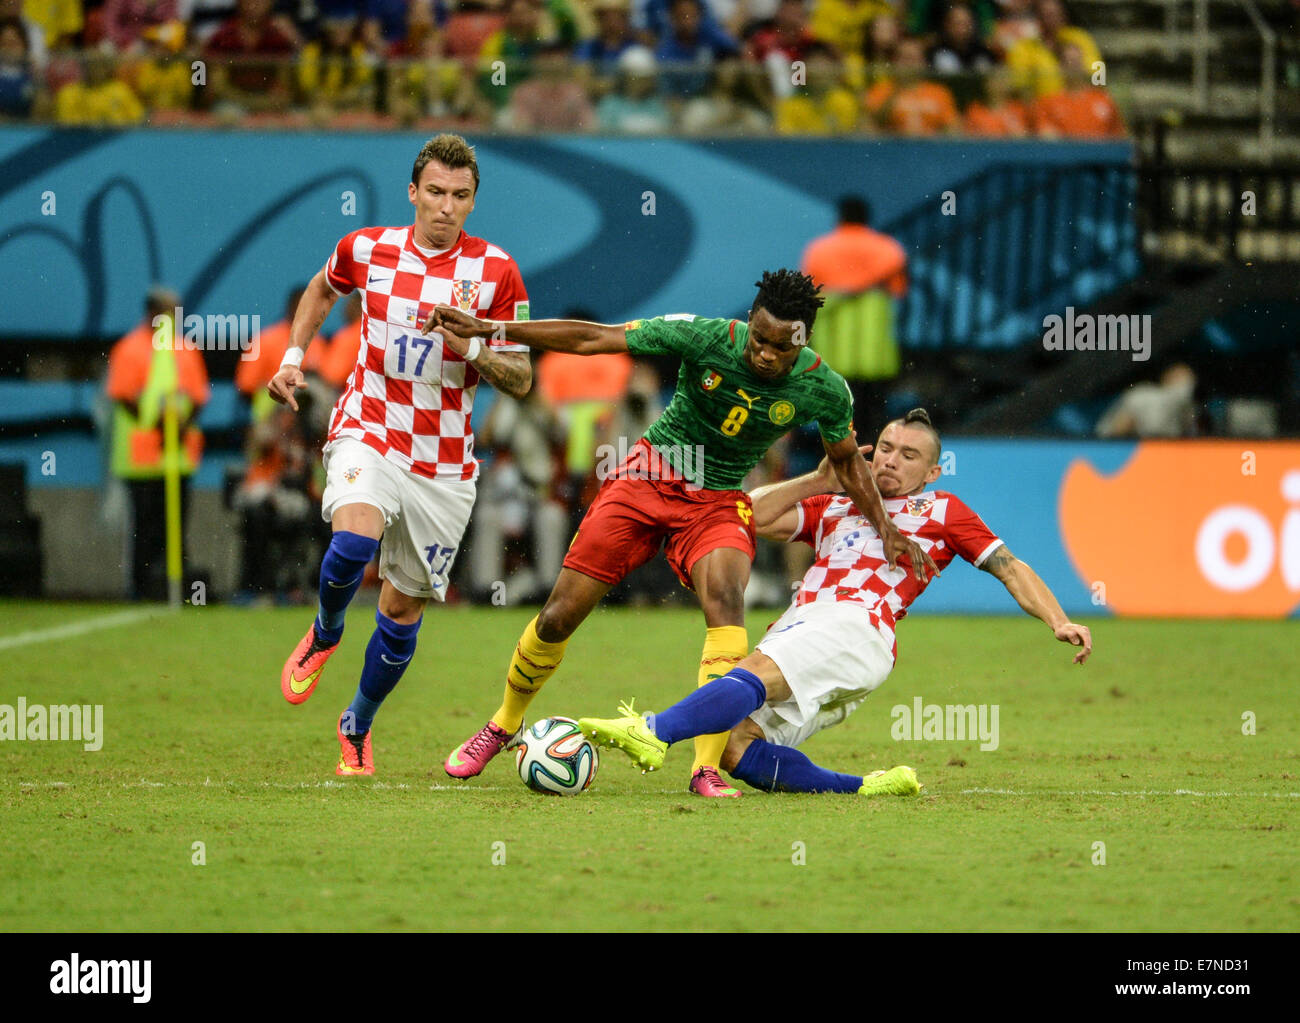 Benjamin Moukandjo. Croatia v Cameroon. Group match. FIFA World Cup 2014 Brazil. Arena Amazonia, Manaus. 18 Jun 2014. Stock Photo